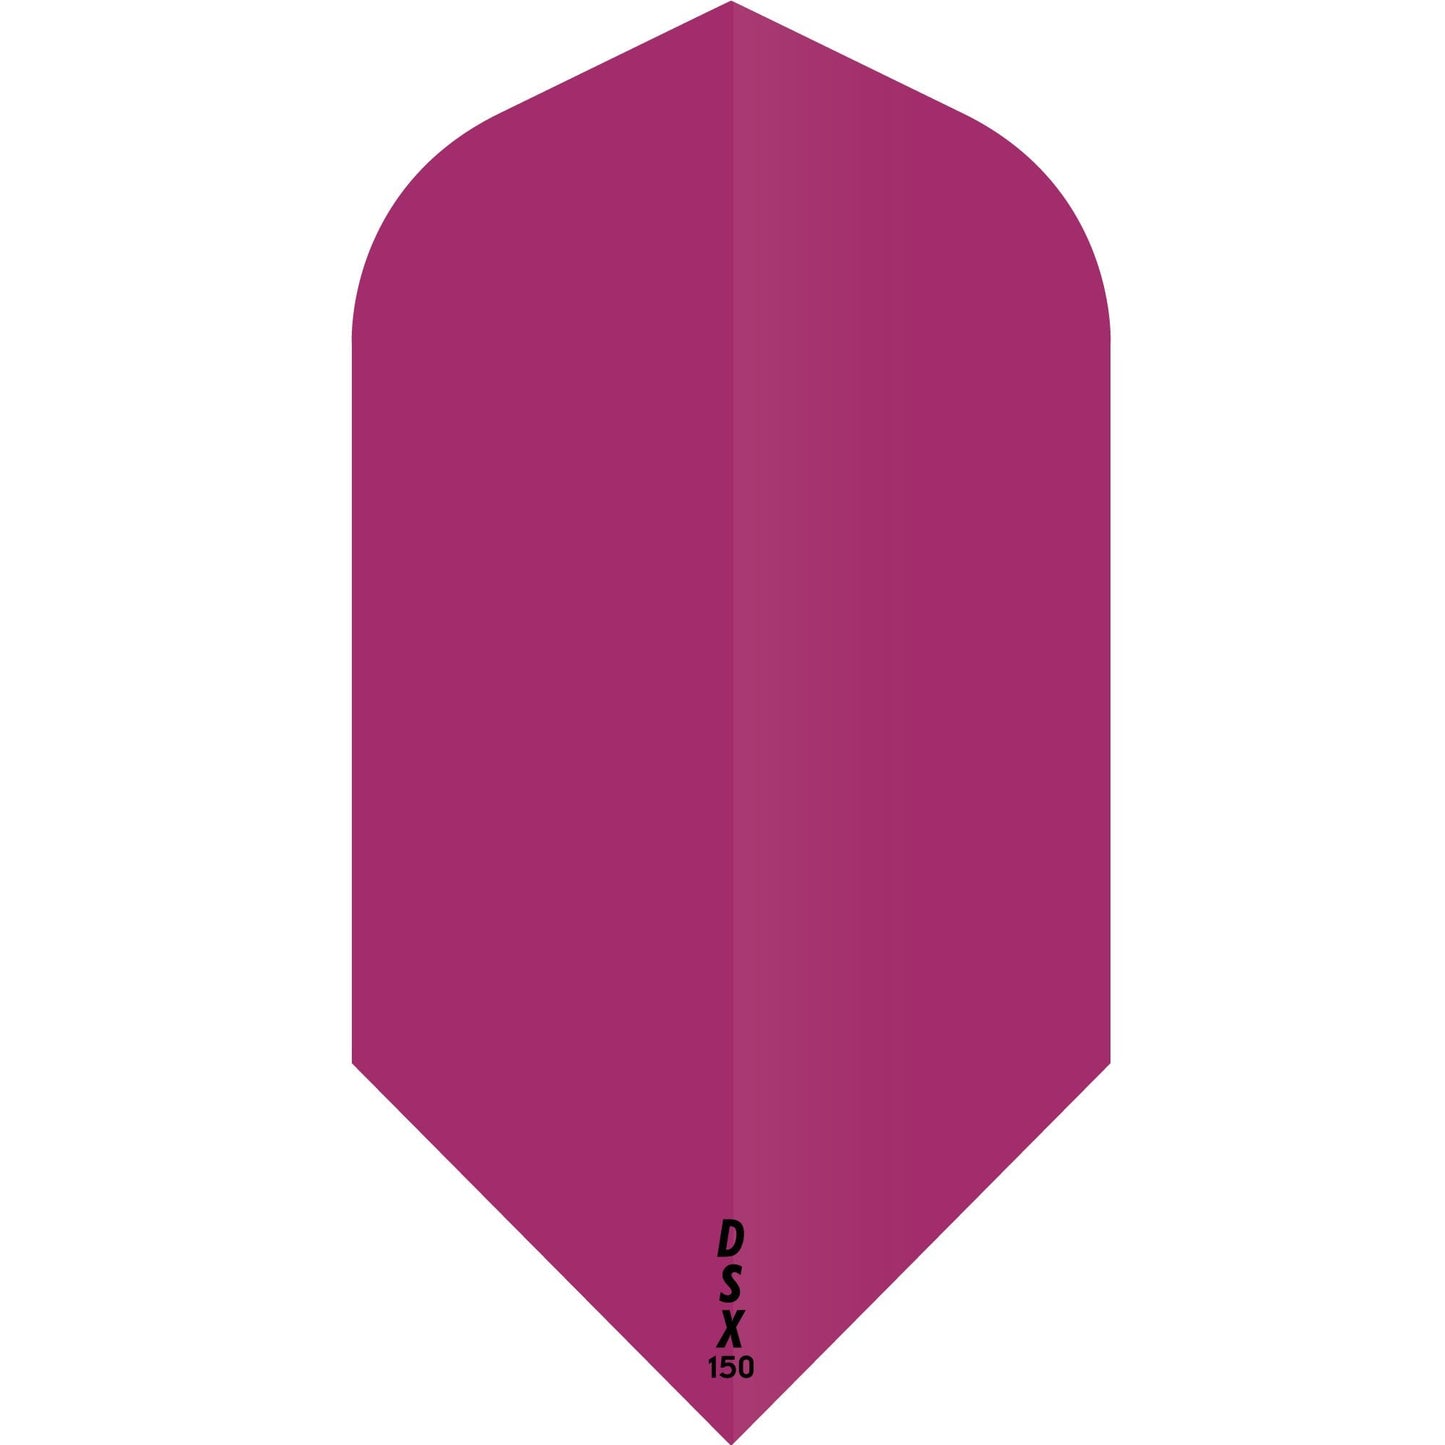 Designa DSX150 Dart Flights - Slim Pink